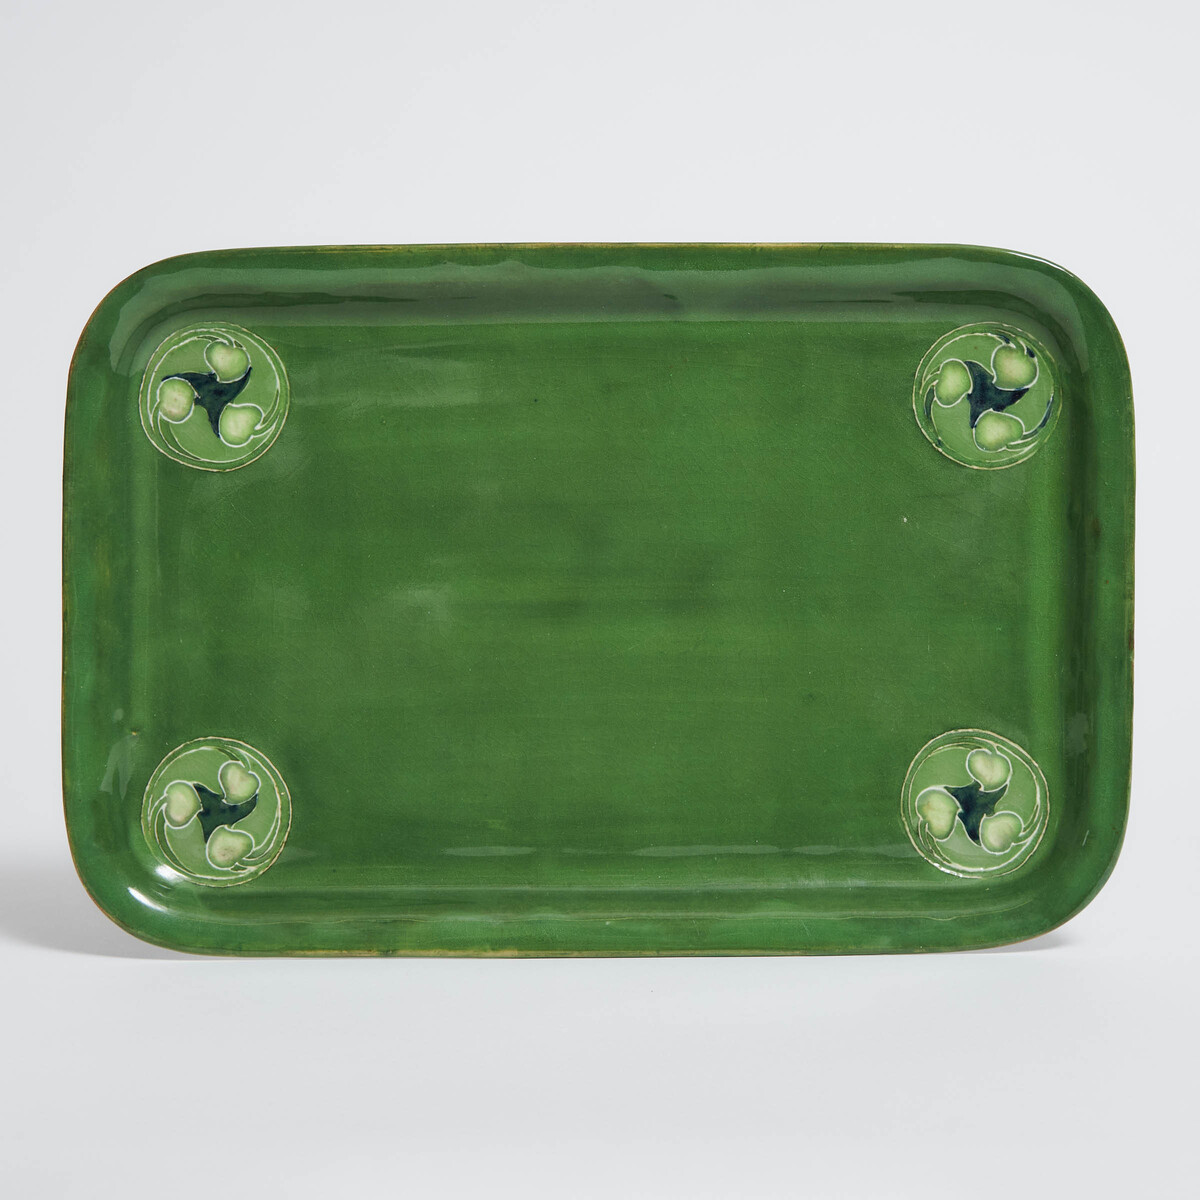 Macintyre Moorcroft Green Flamminian Rectangular Tray, dated 1912, 13.1 x 8.7 in — 33.2 x 22.1 cm